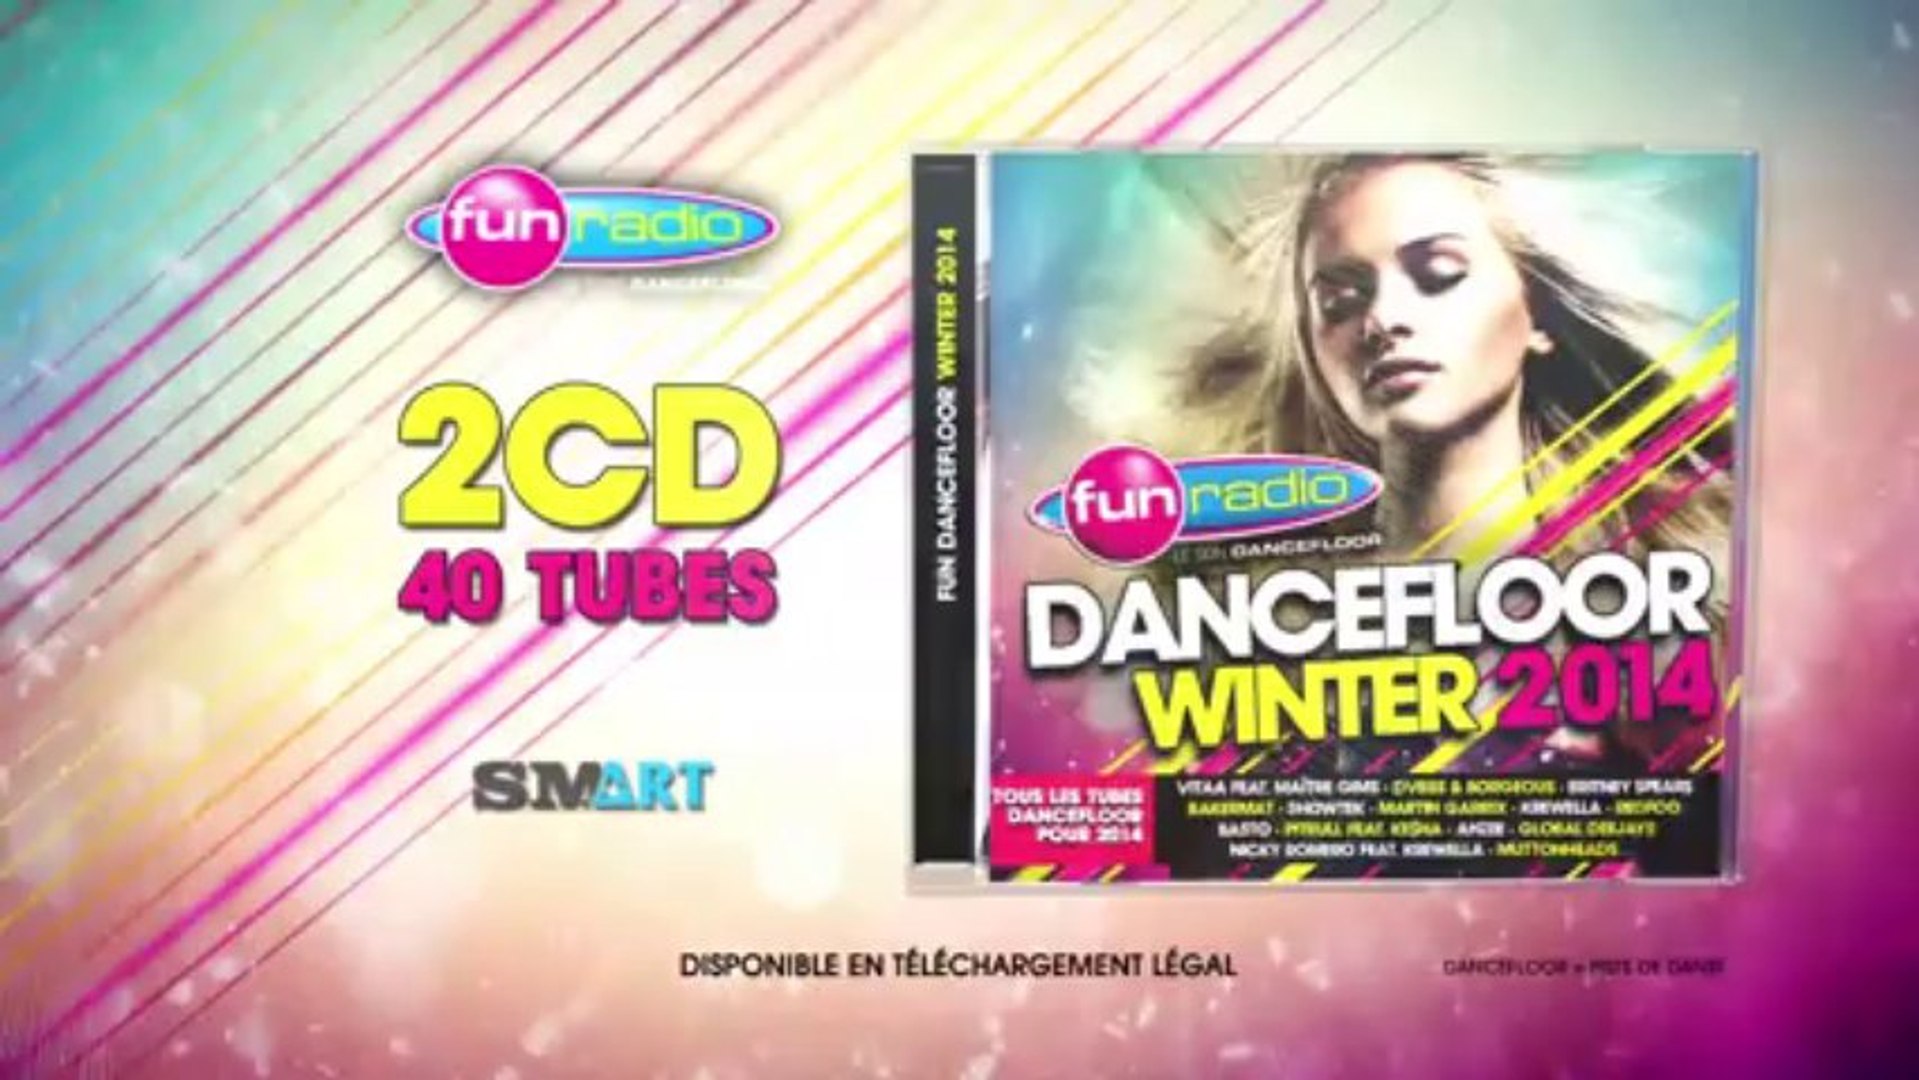 Fun Dancefloor Winter 2014 - Vidéo Dailymotion